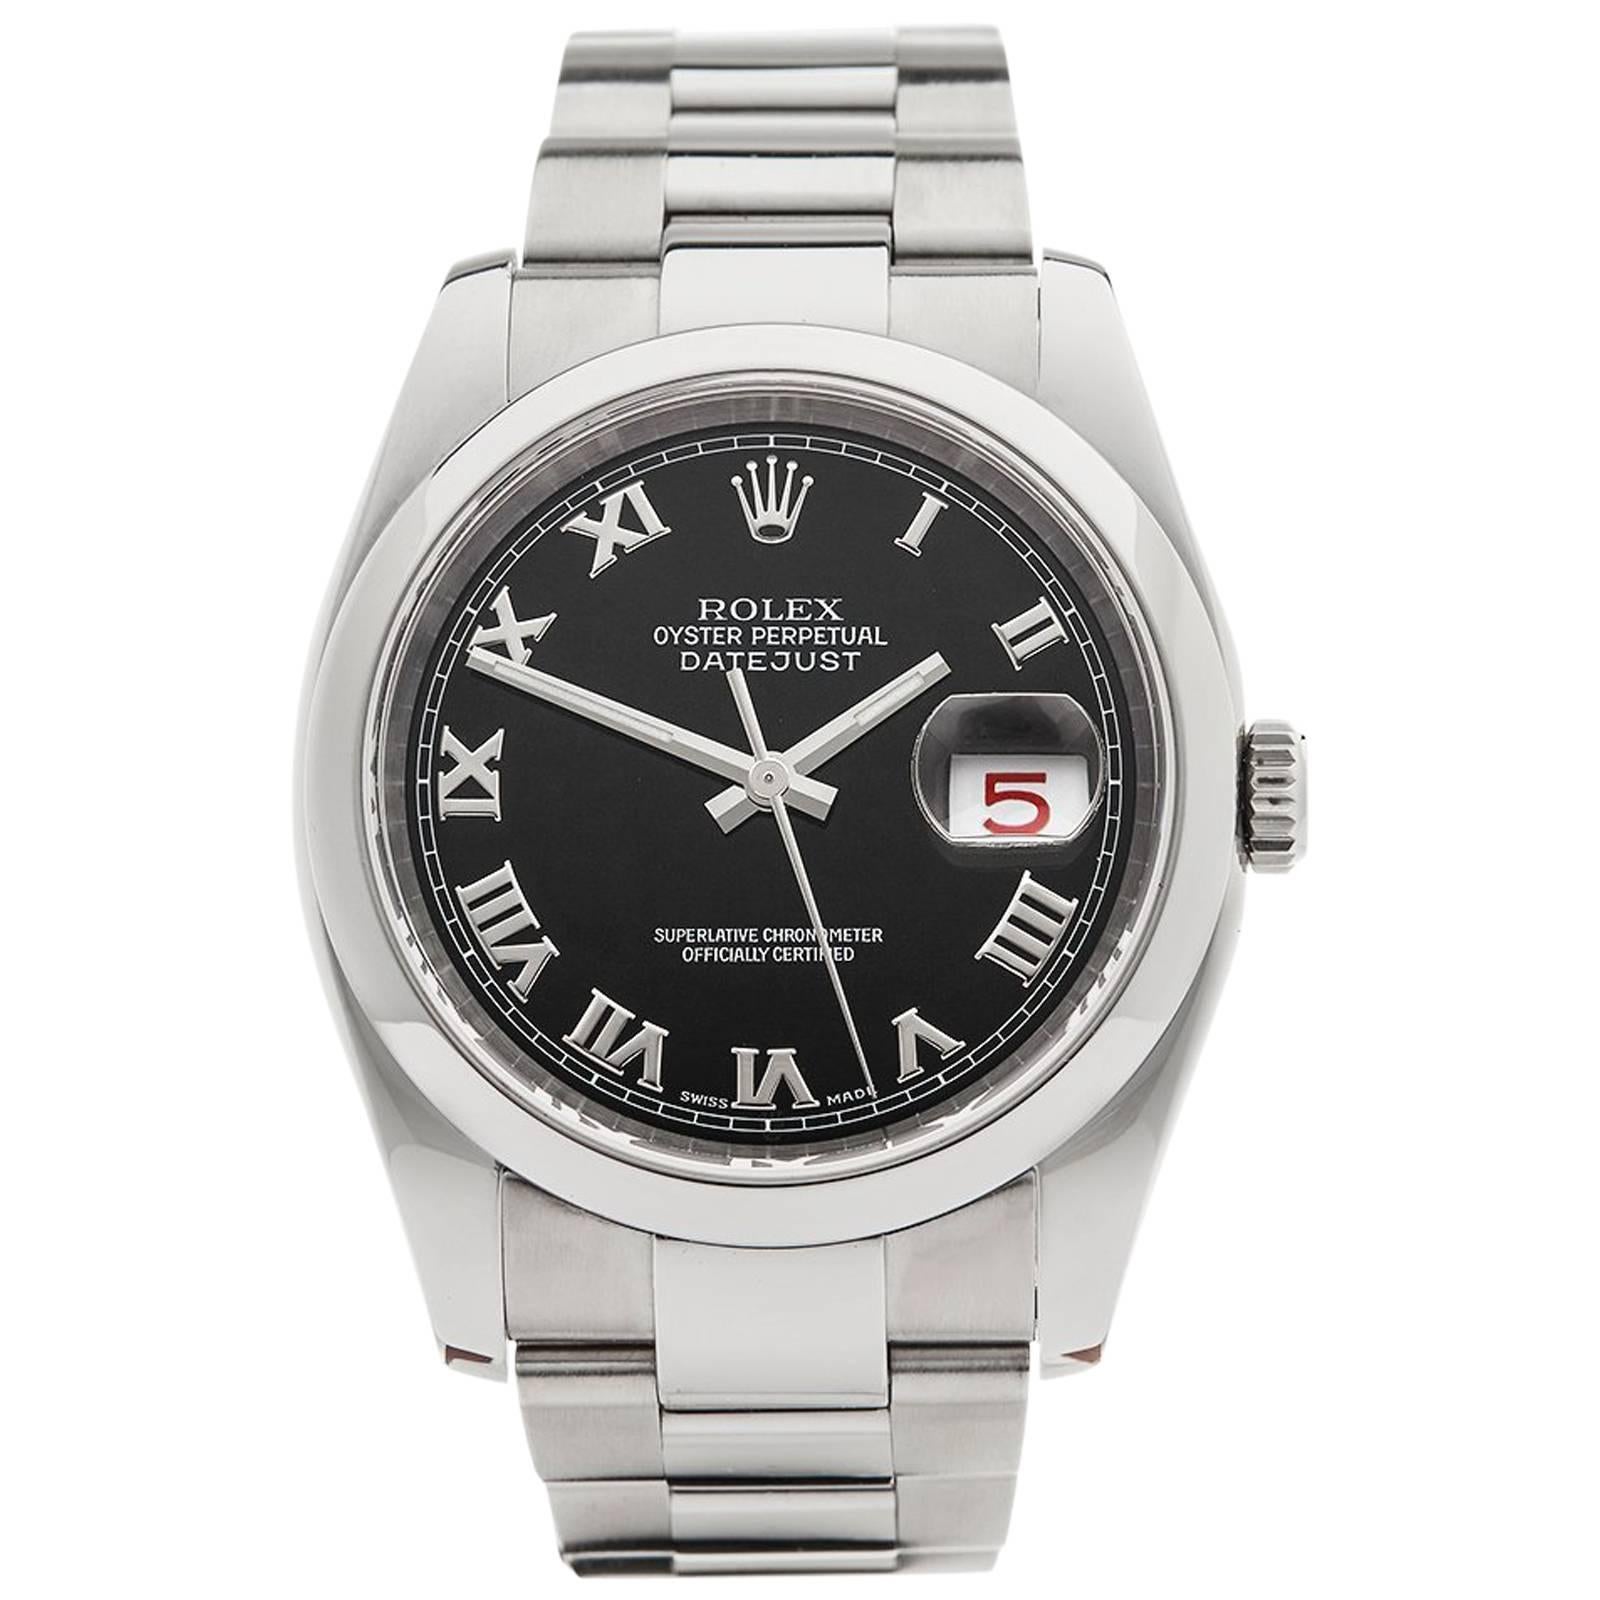 Rolex Stainless Steel Datejust Automatic Wristwatch Ref 116200, 2006